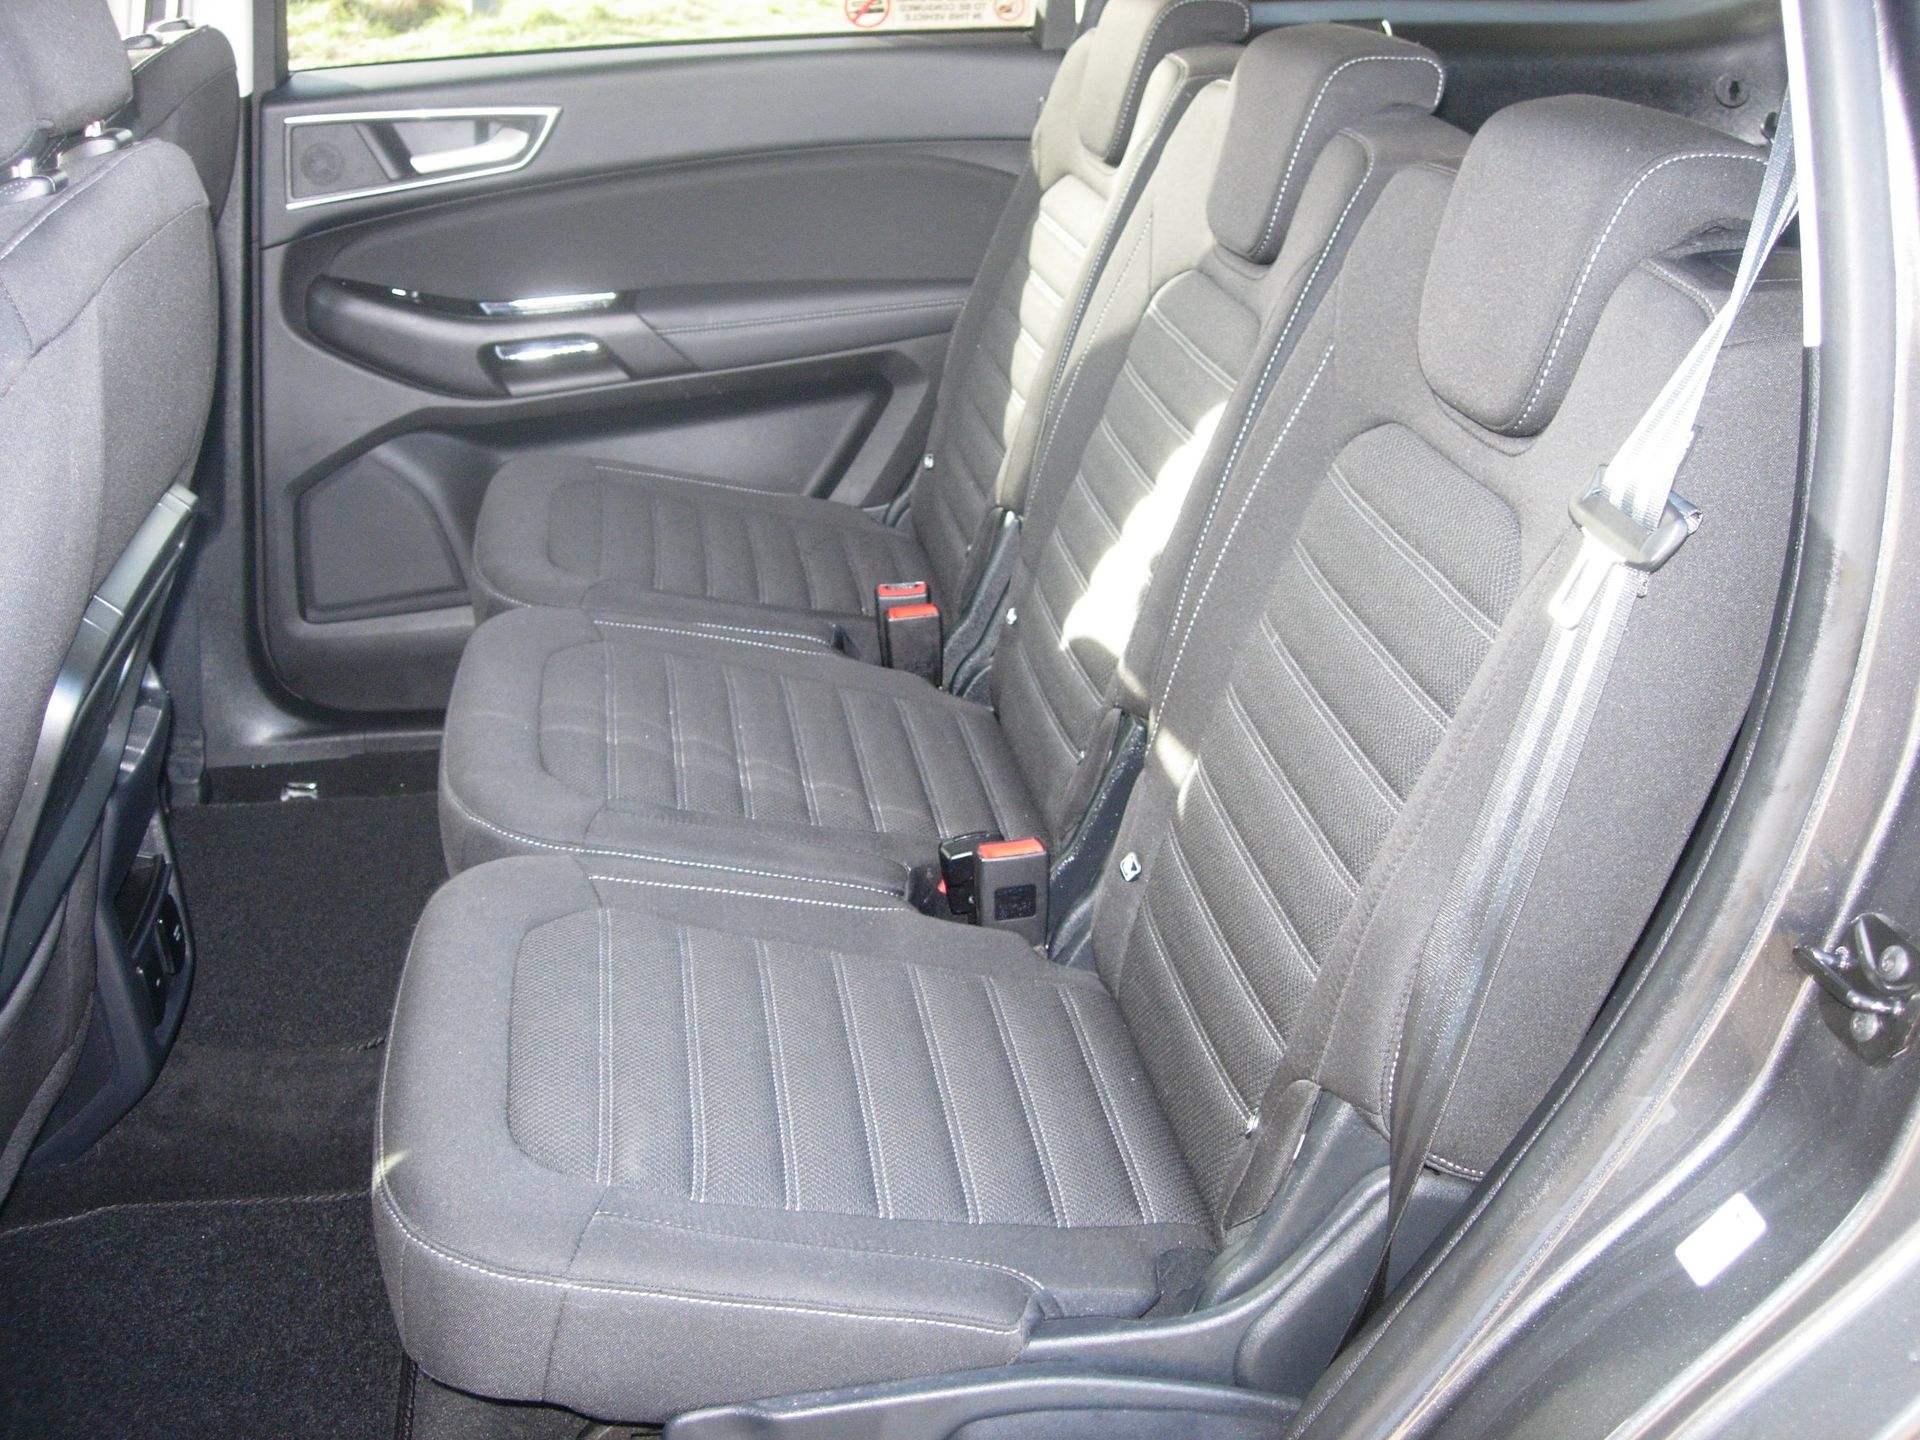 OUR CAR interior